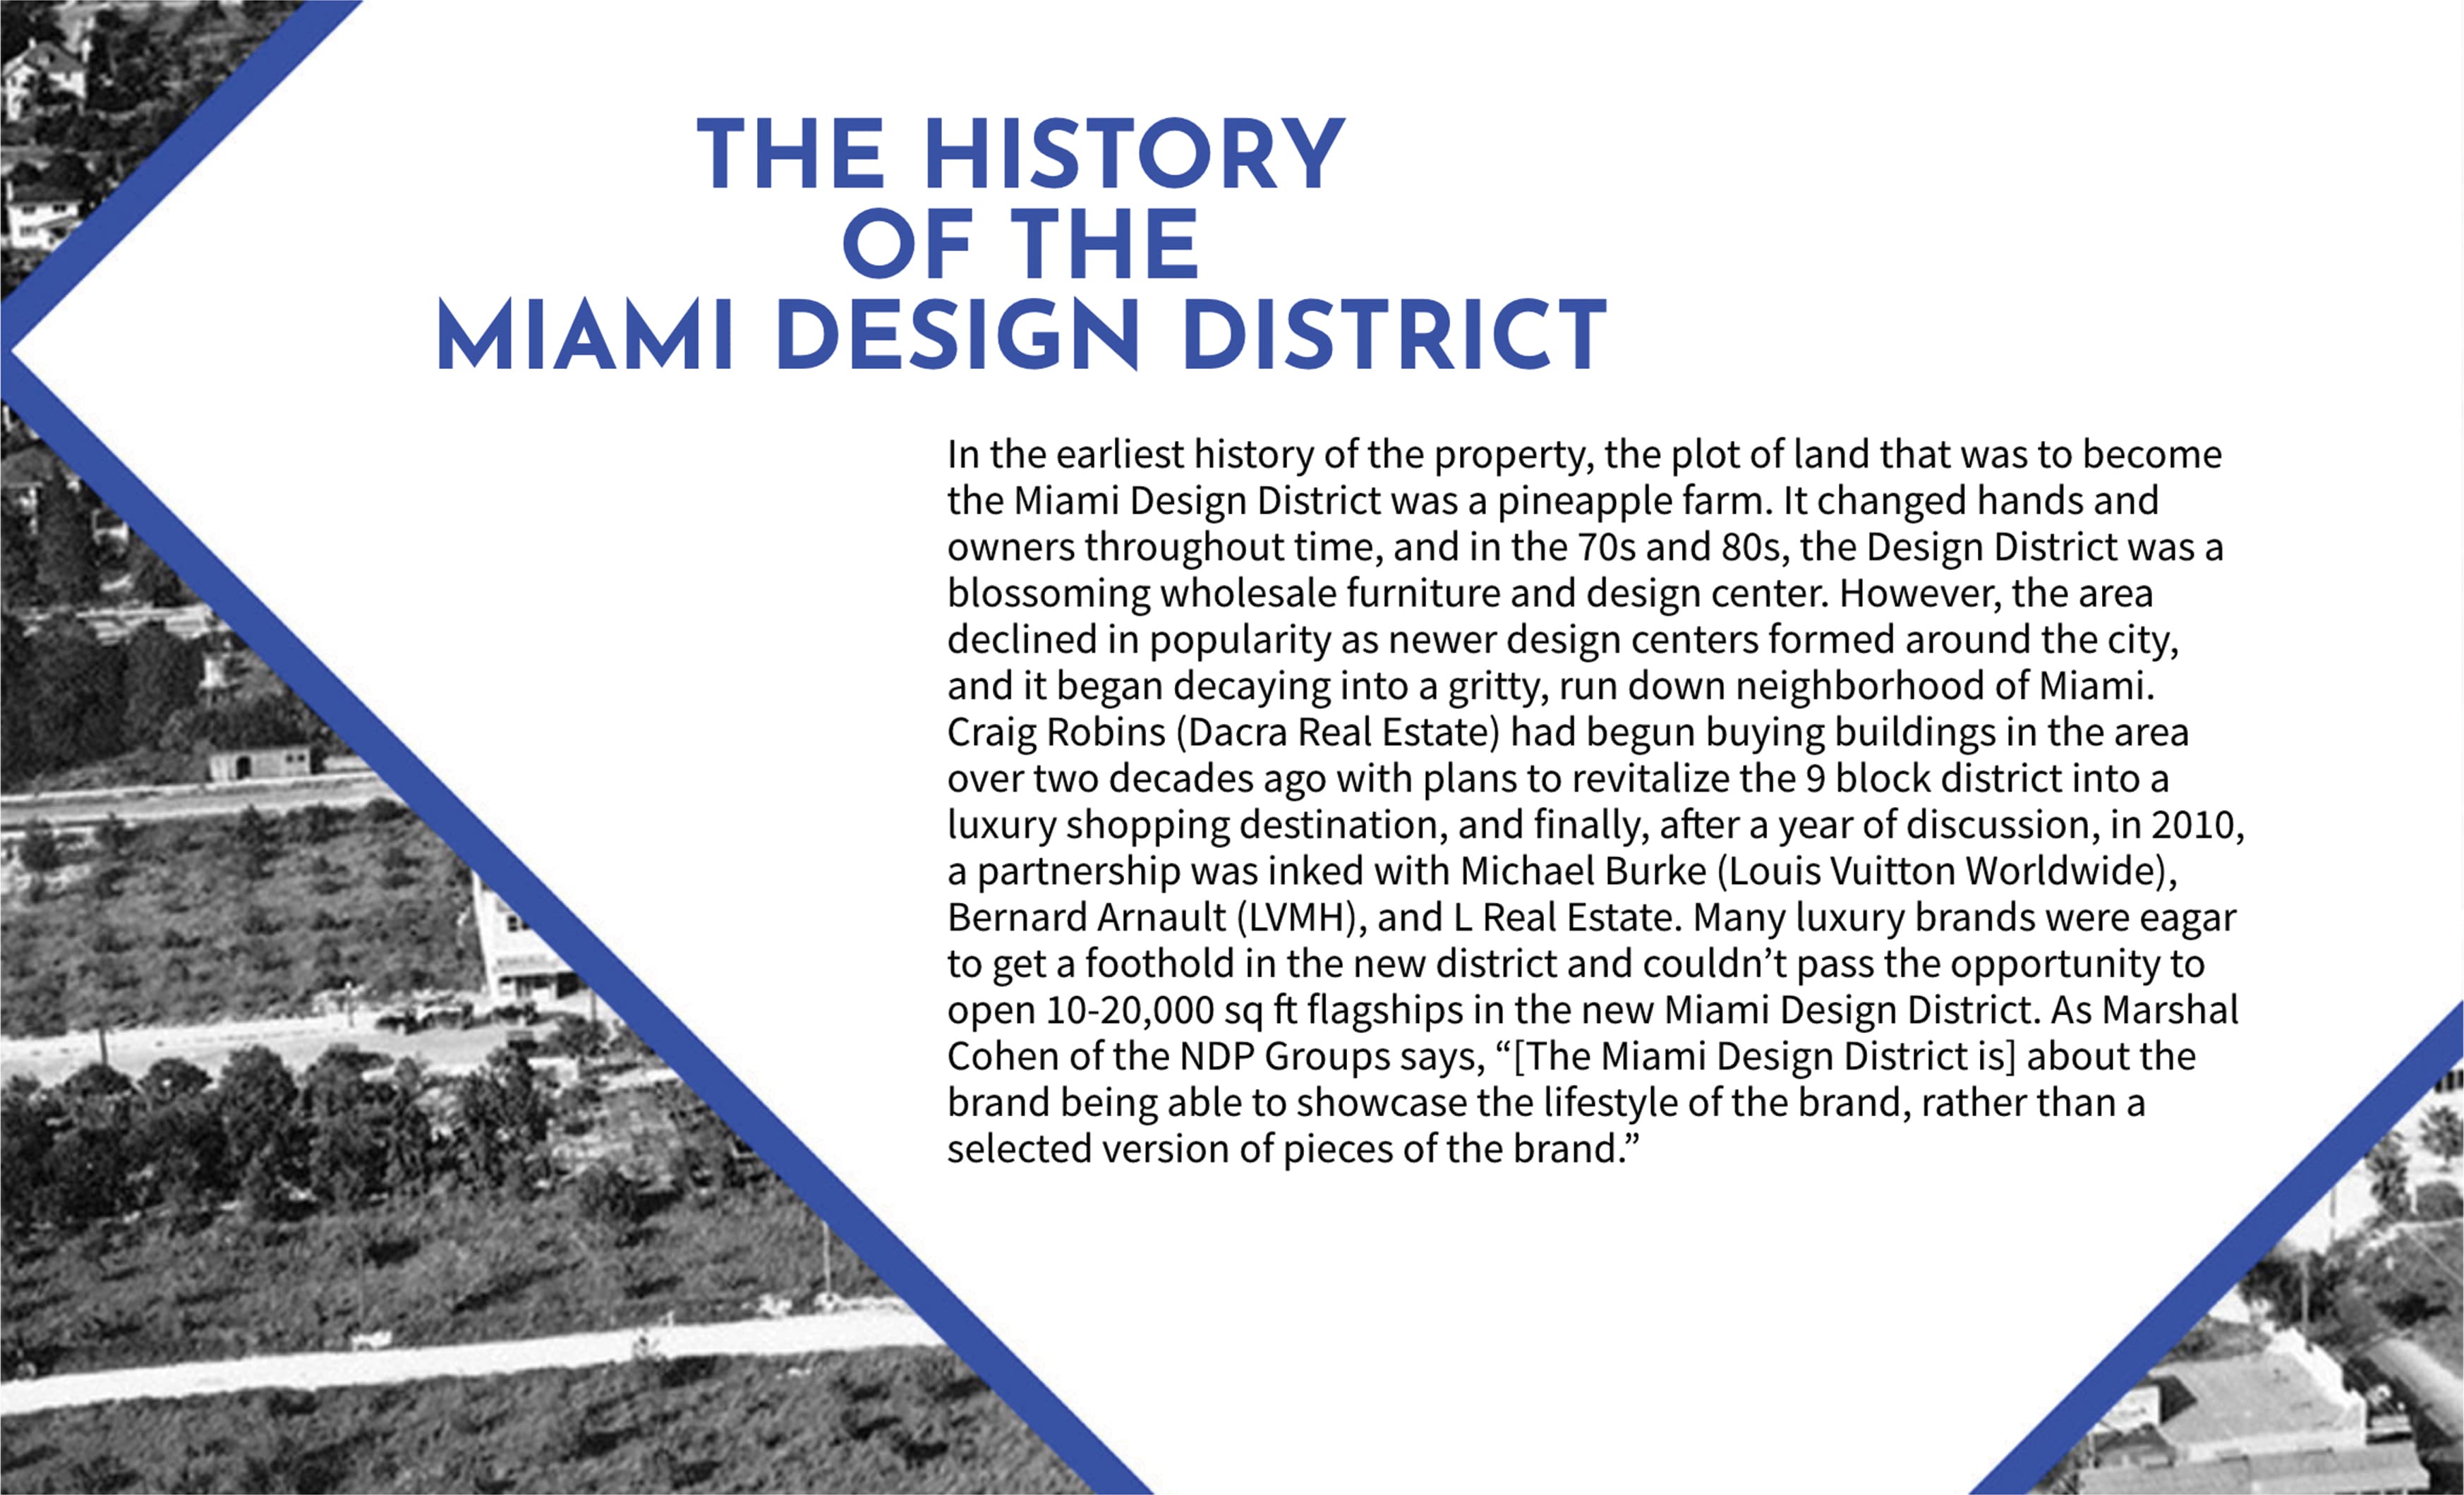 Miami Design District Study · RSM Design